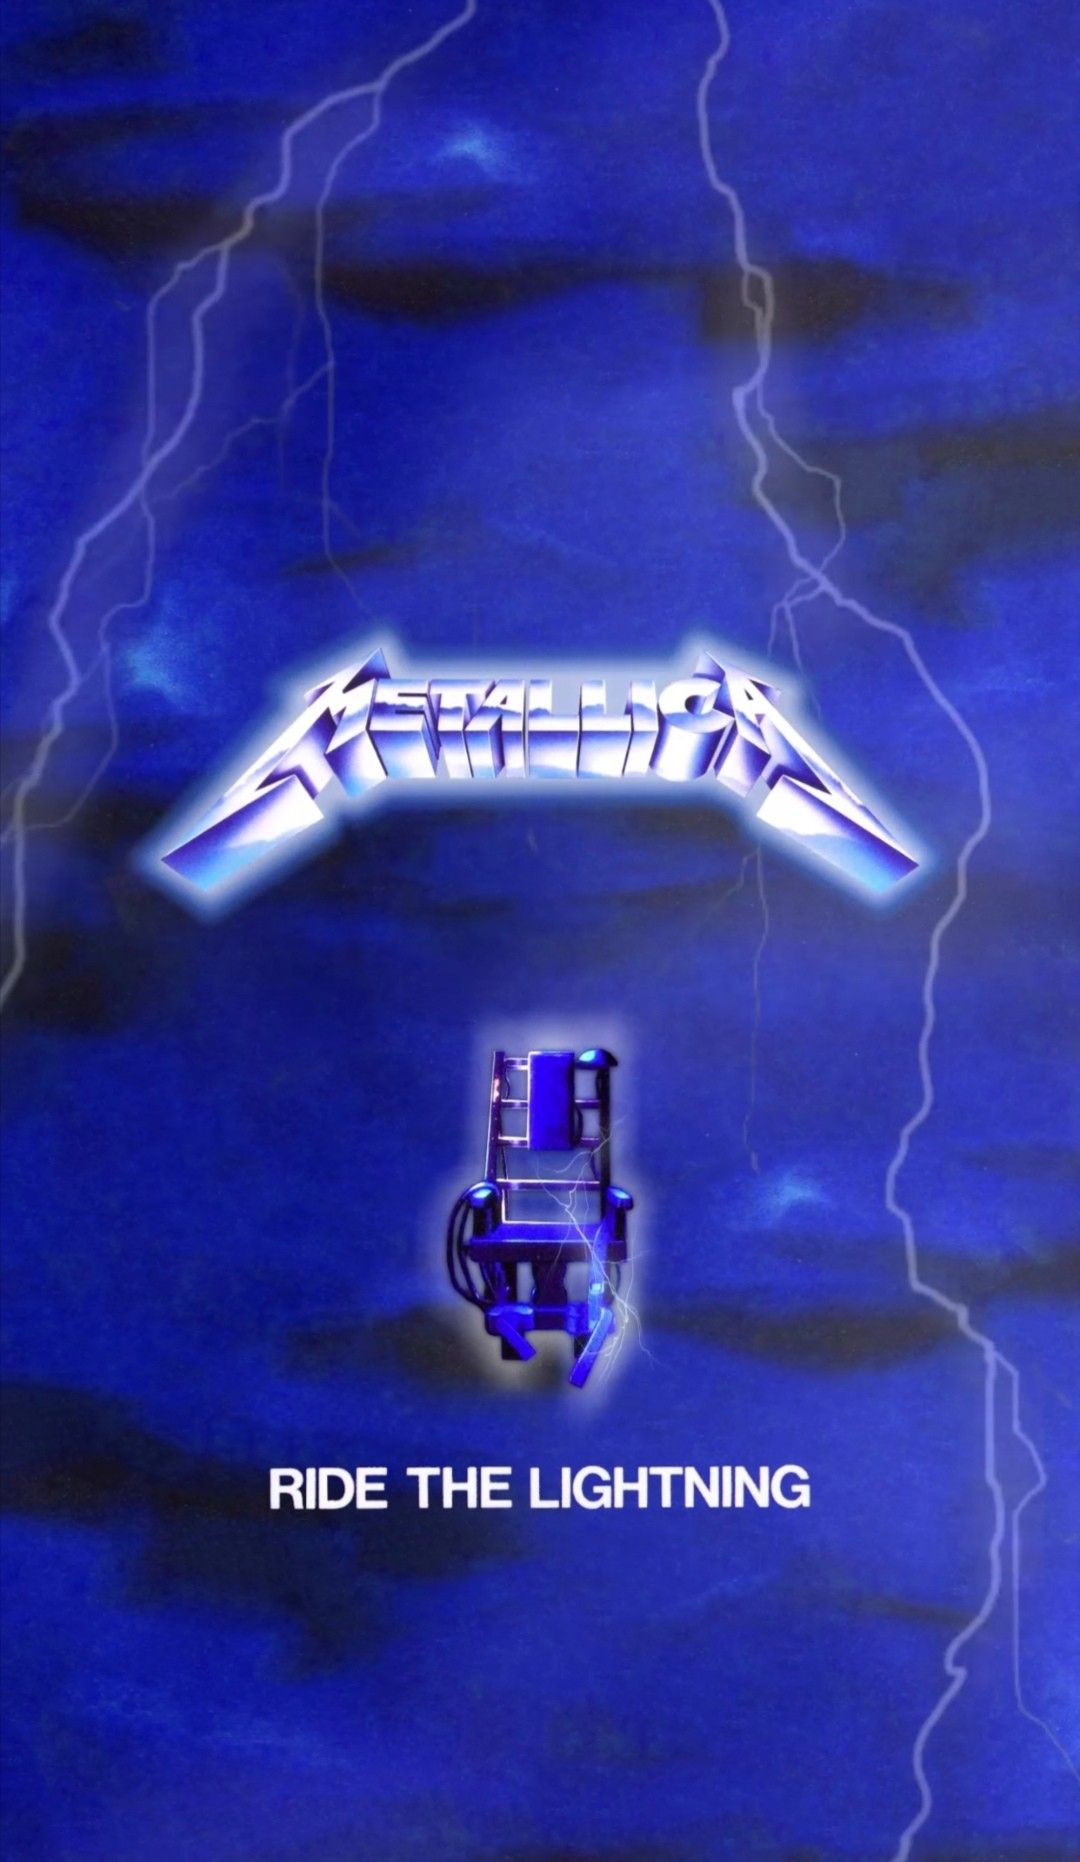 Metallica ride the lightning album cover wallpaper fondo iPhone. Ride the lightning, Metallica, Horror artwork